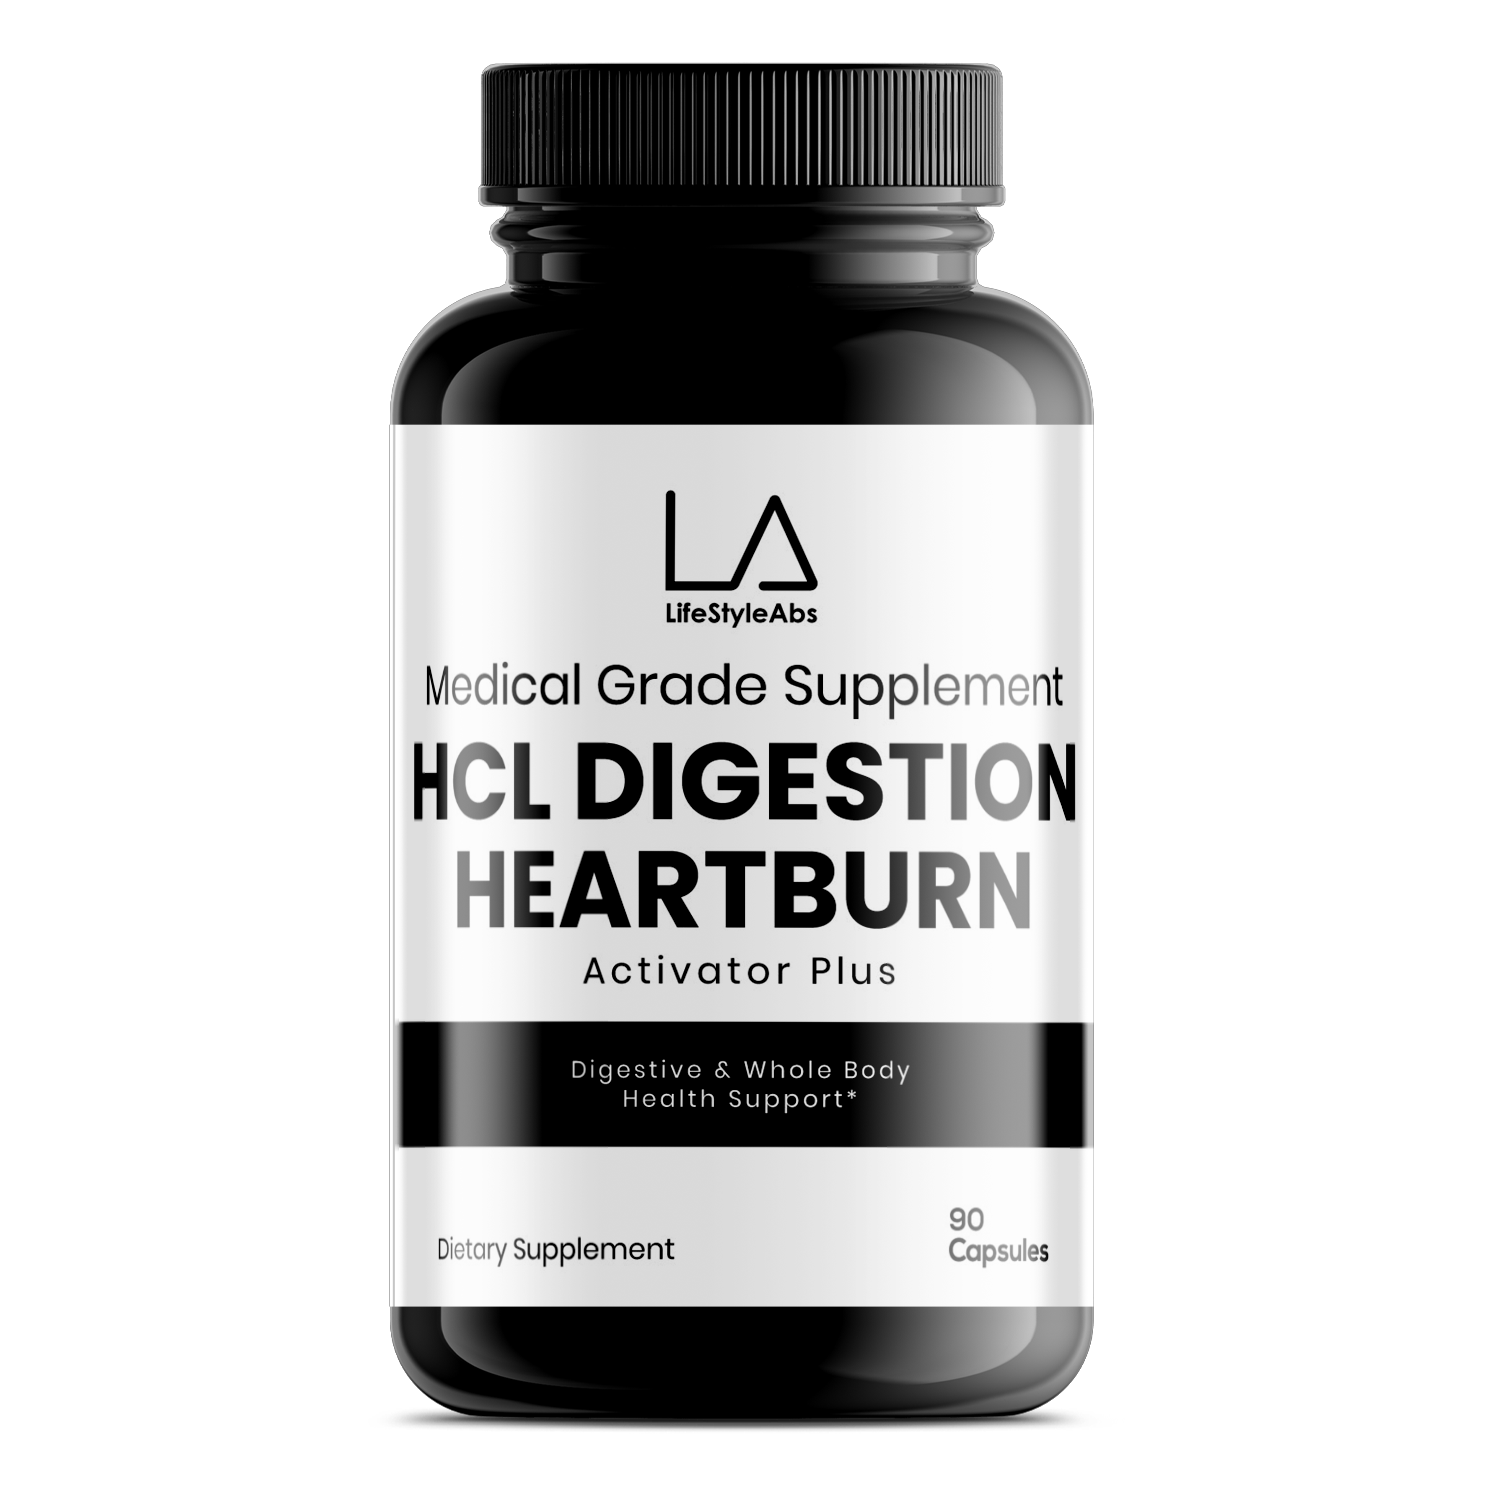 HCL Digestion Heartburn